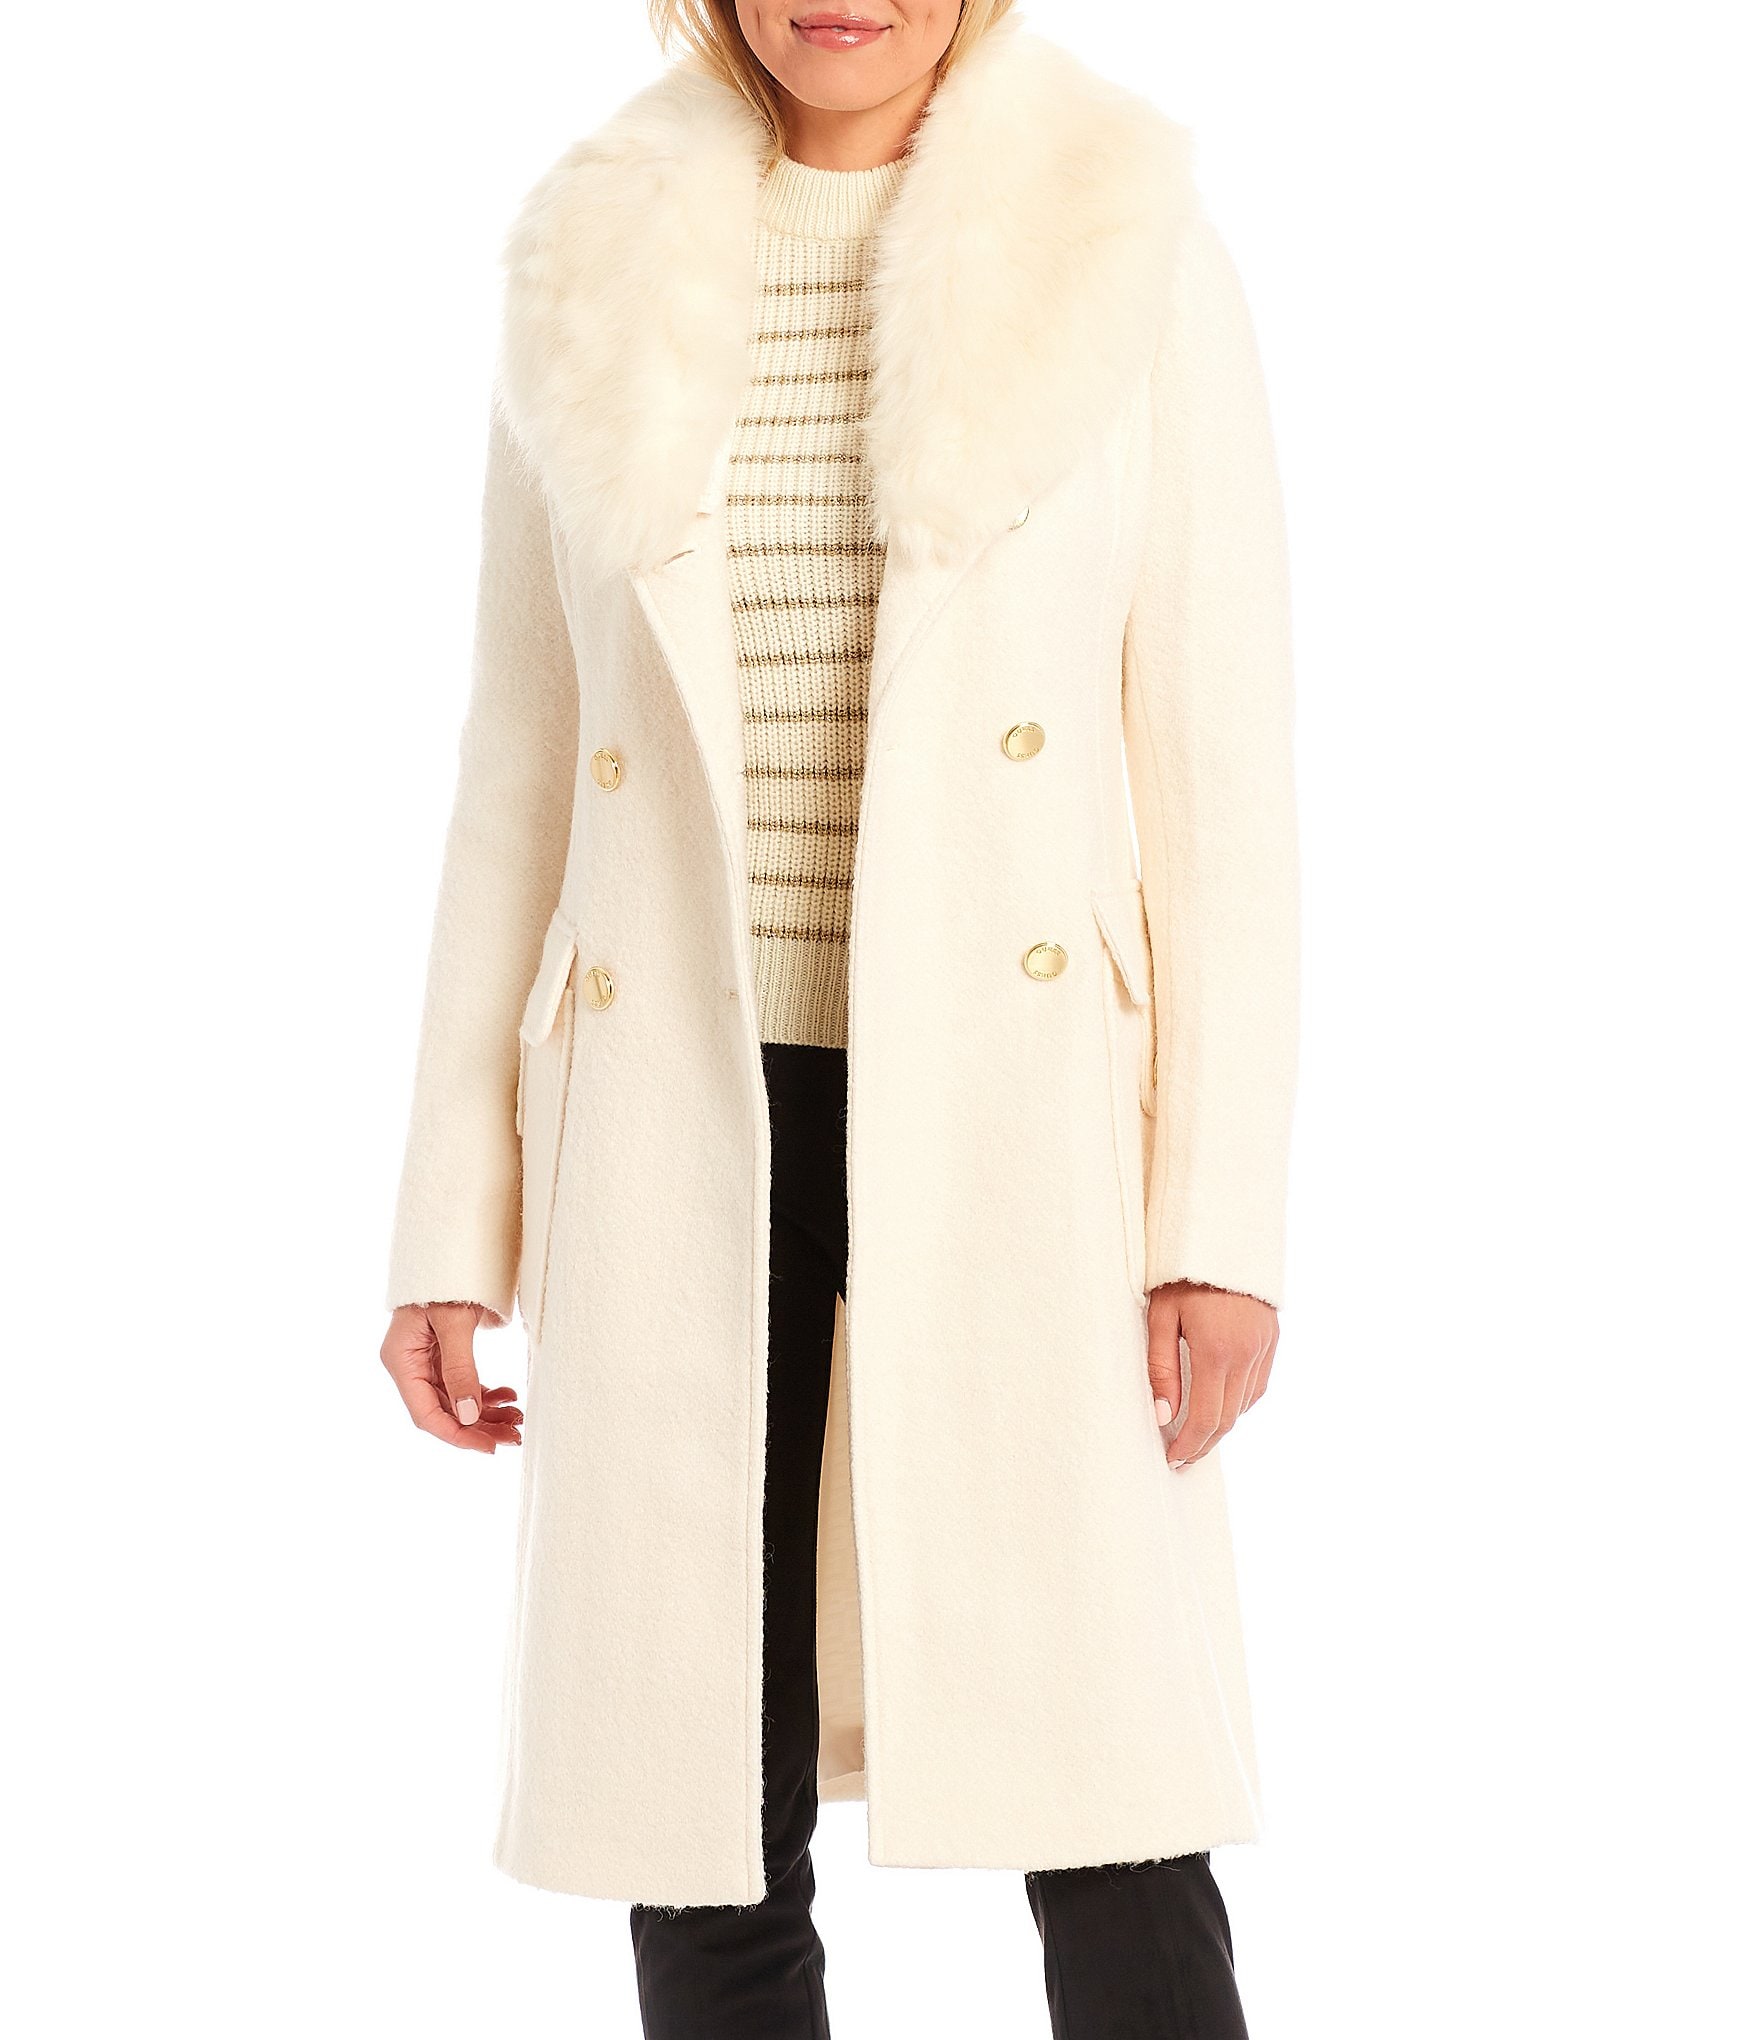 Guess Women's Coats & Jackets | Dillard's